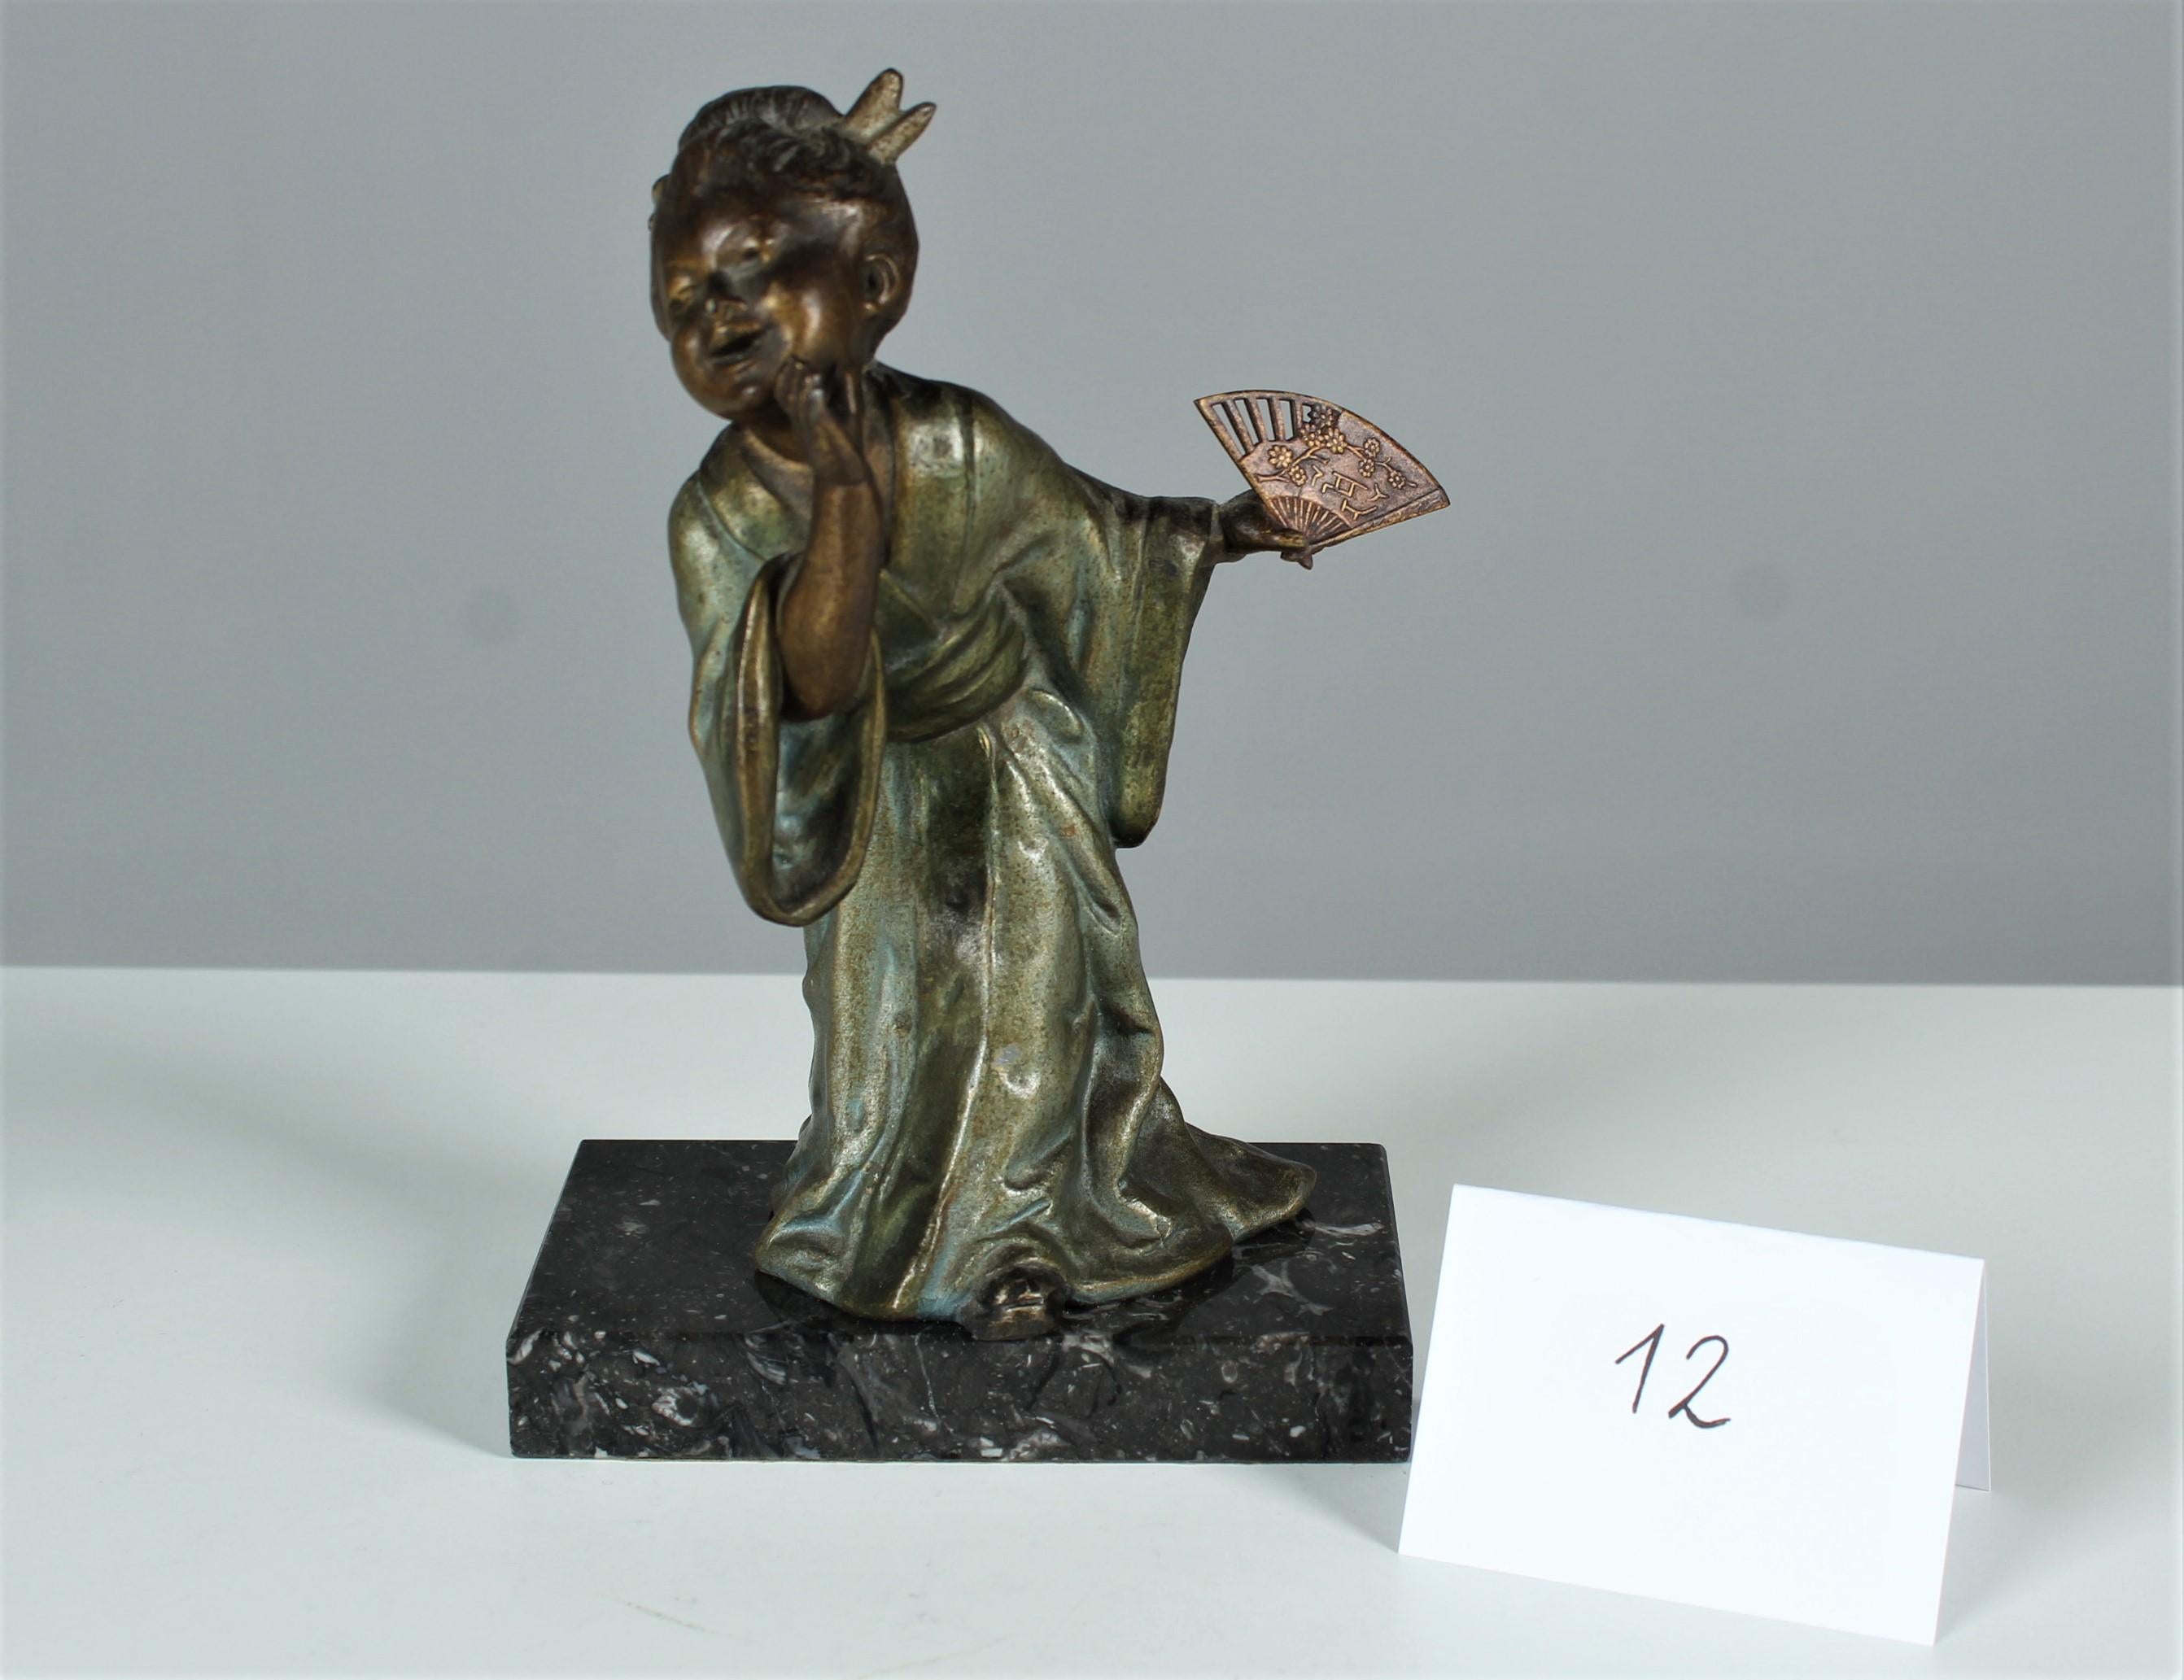 chinese woman statue